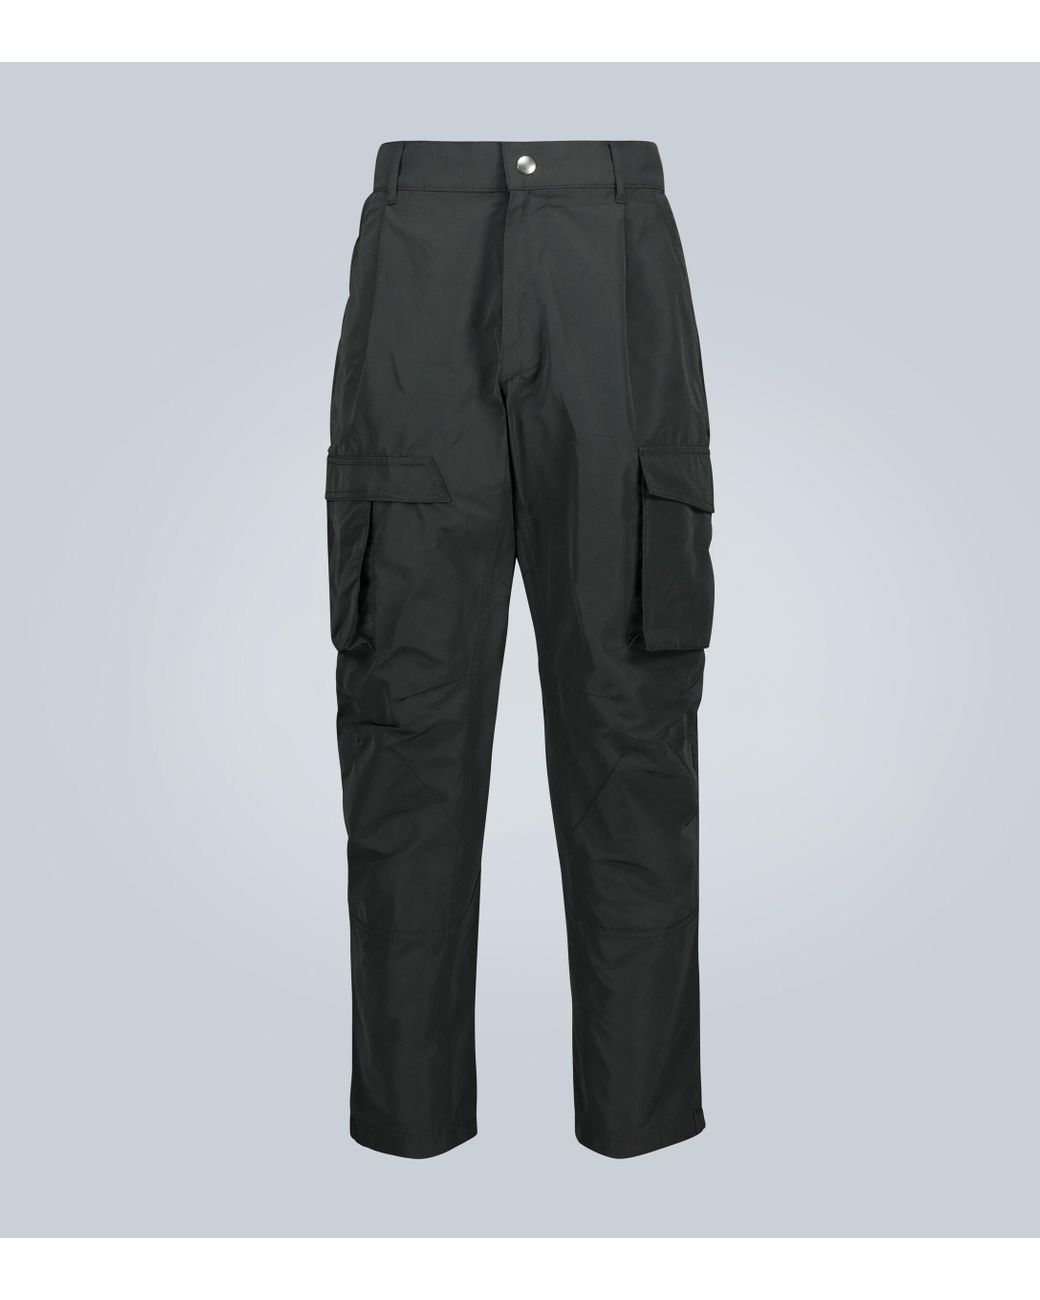 Givenchy Multipocket Cargo Pants in Black for Men - Lyst